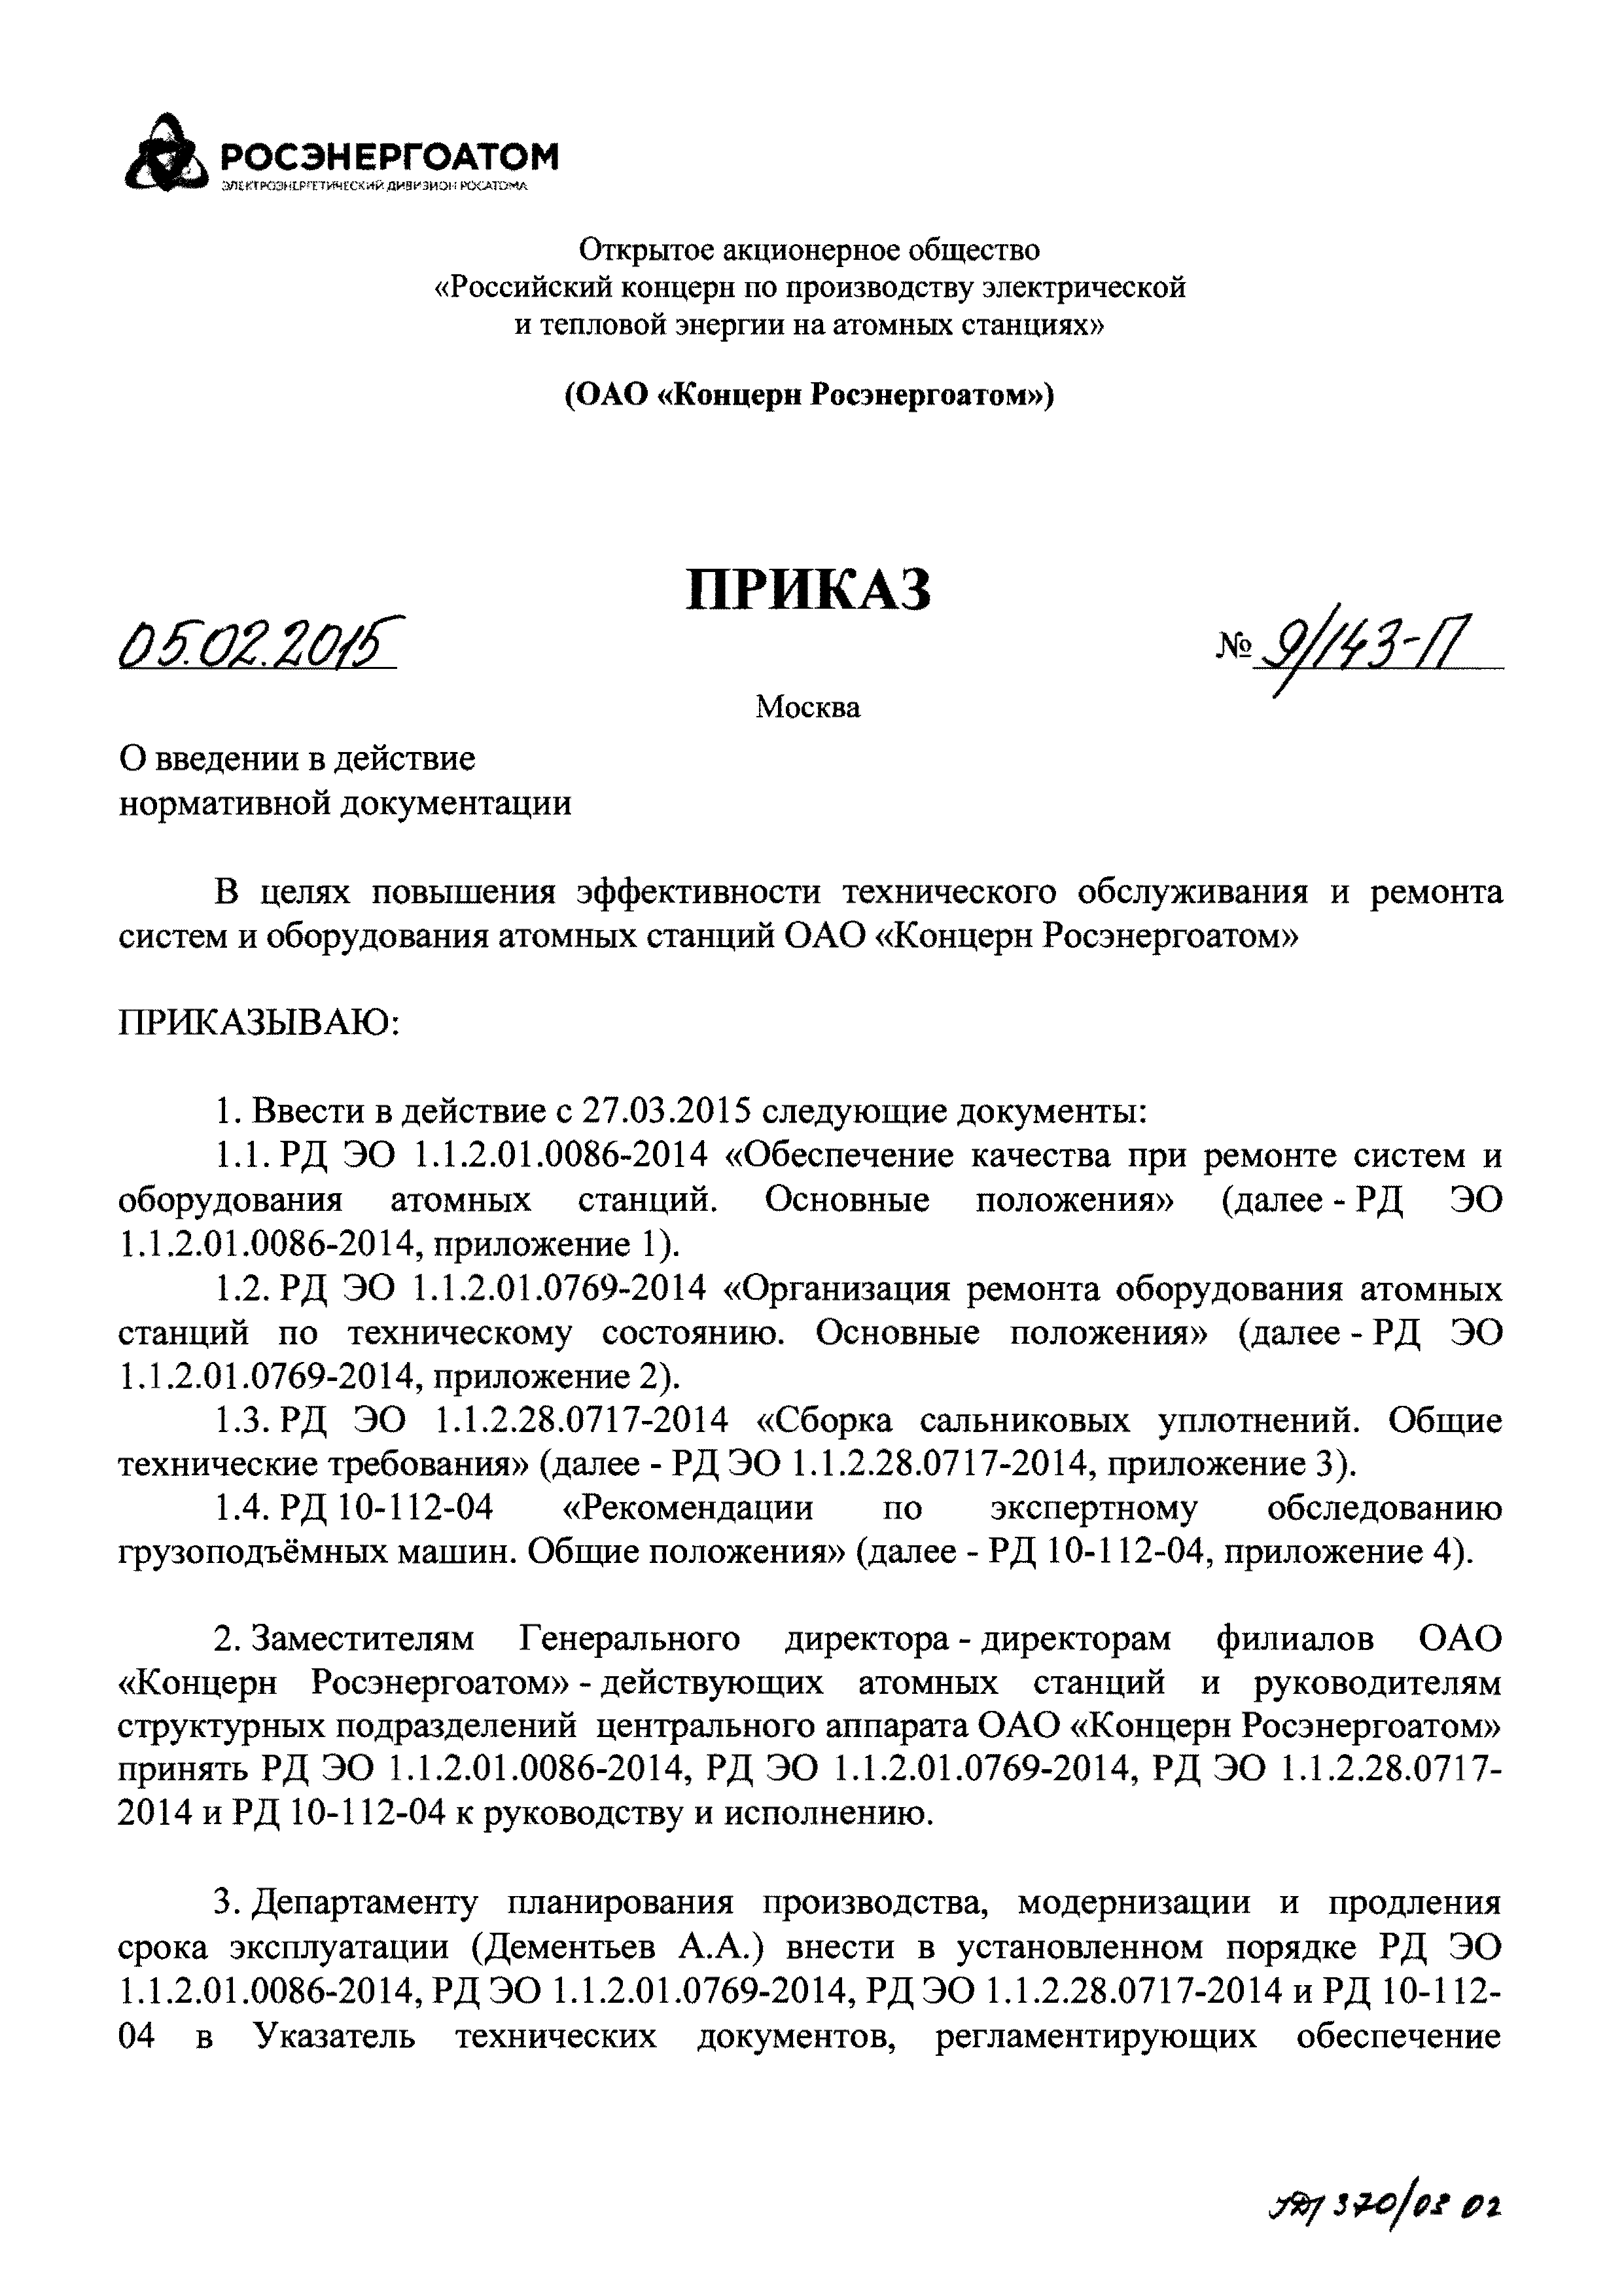 РД ЭО 1.1.2.01.0086-2014